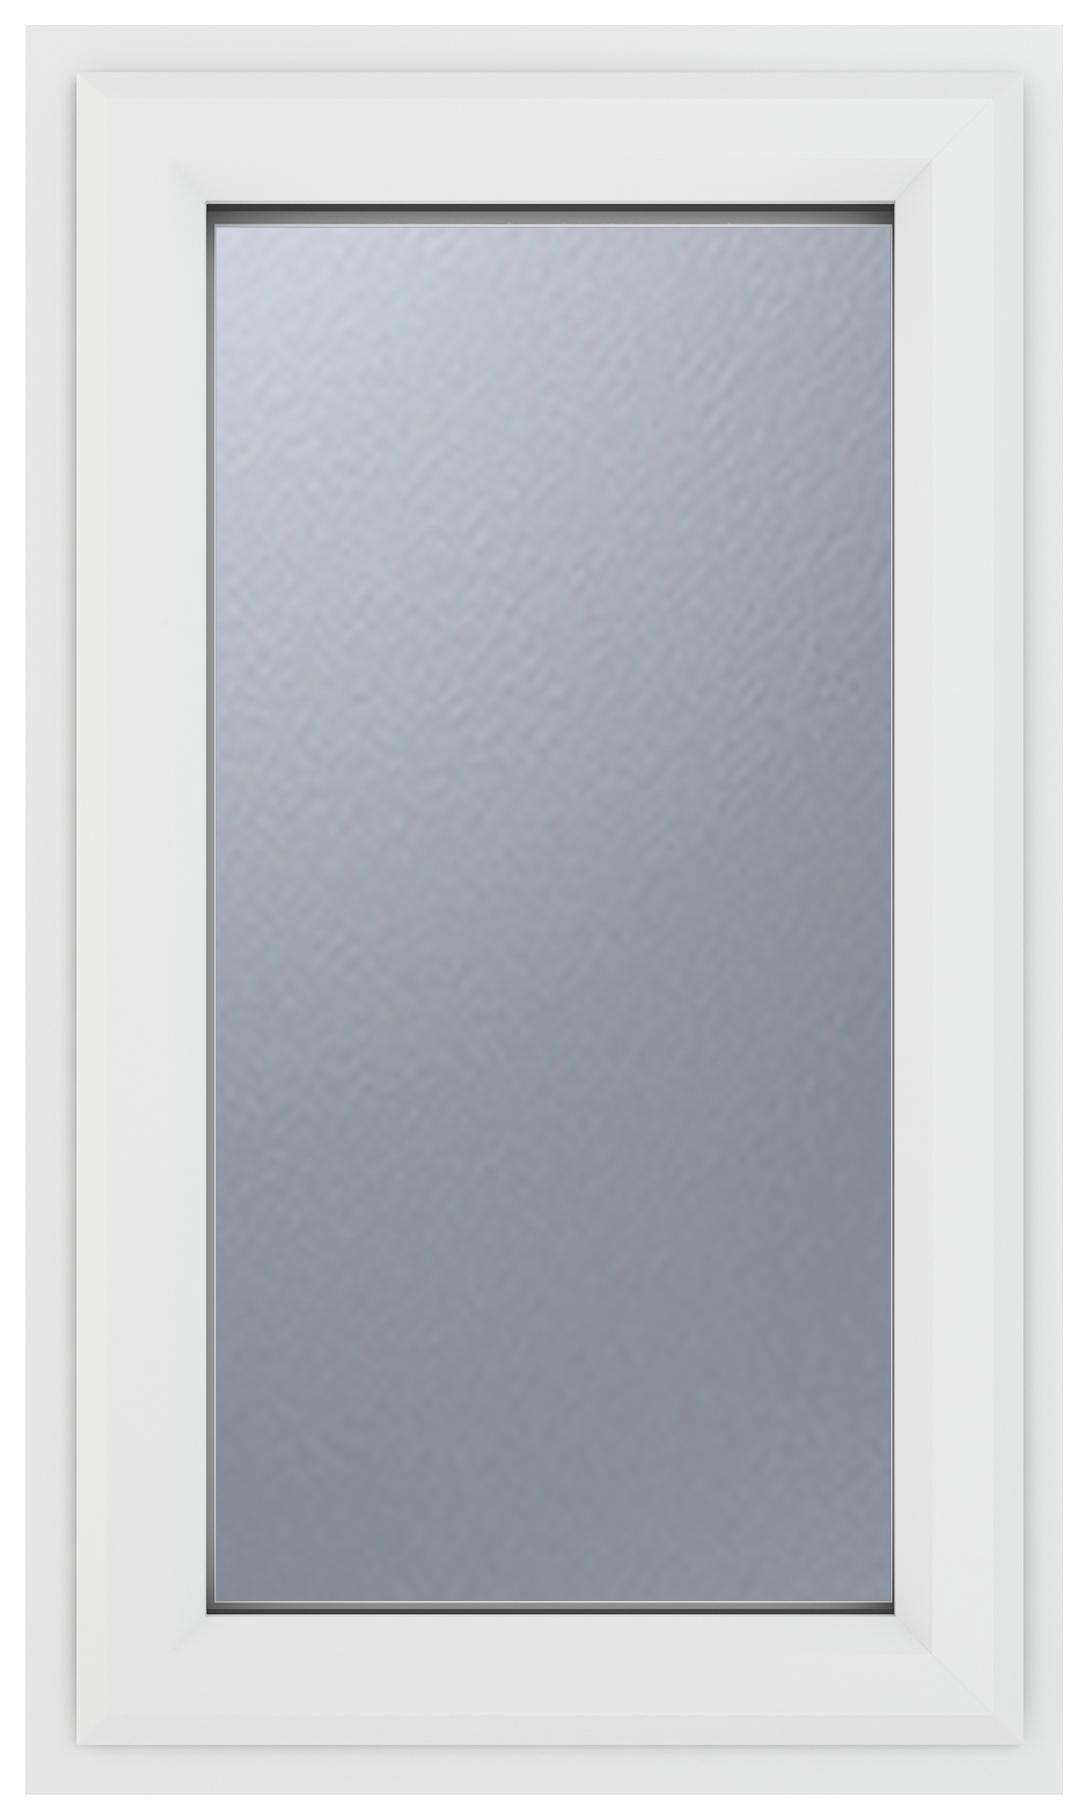 Crystal uPVC White Top Opener Obscure Double Glazed Window - 610 x 1040mm